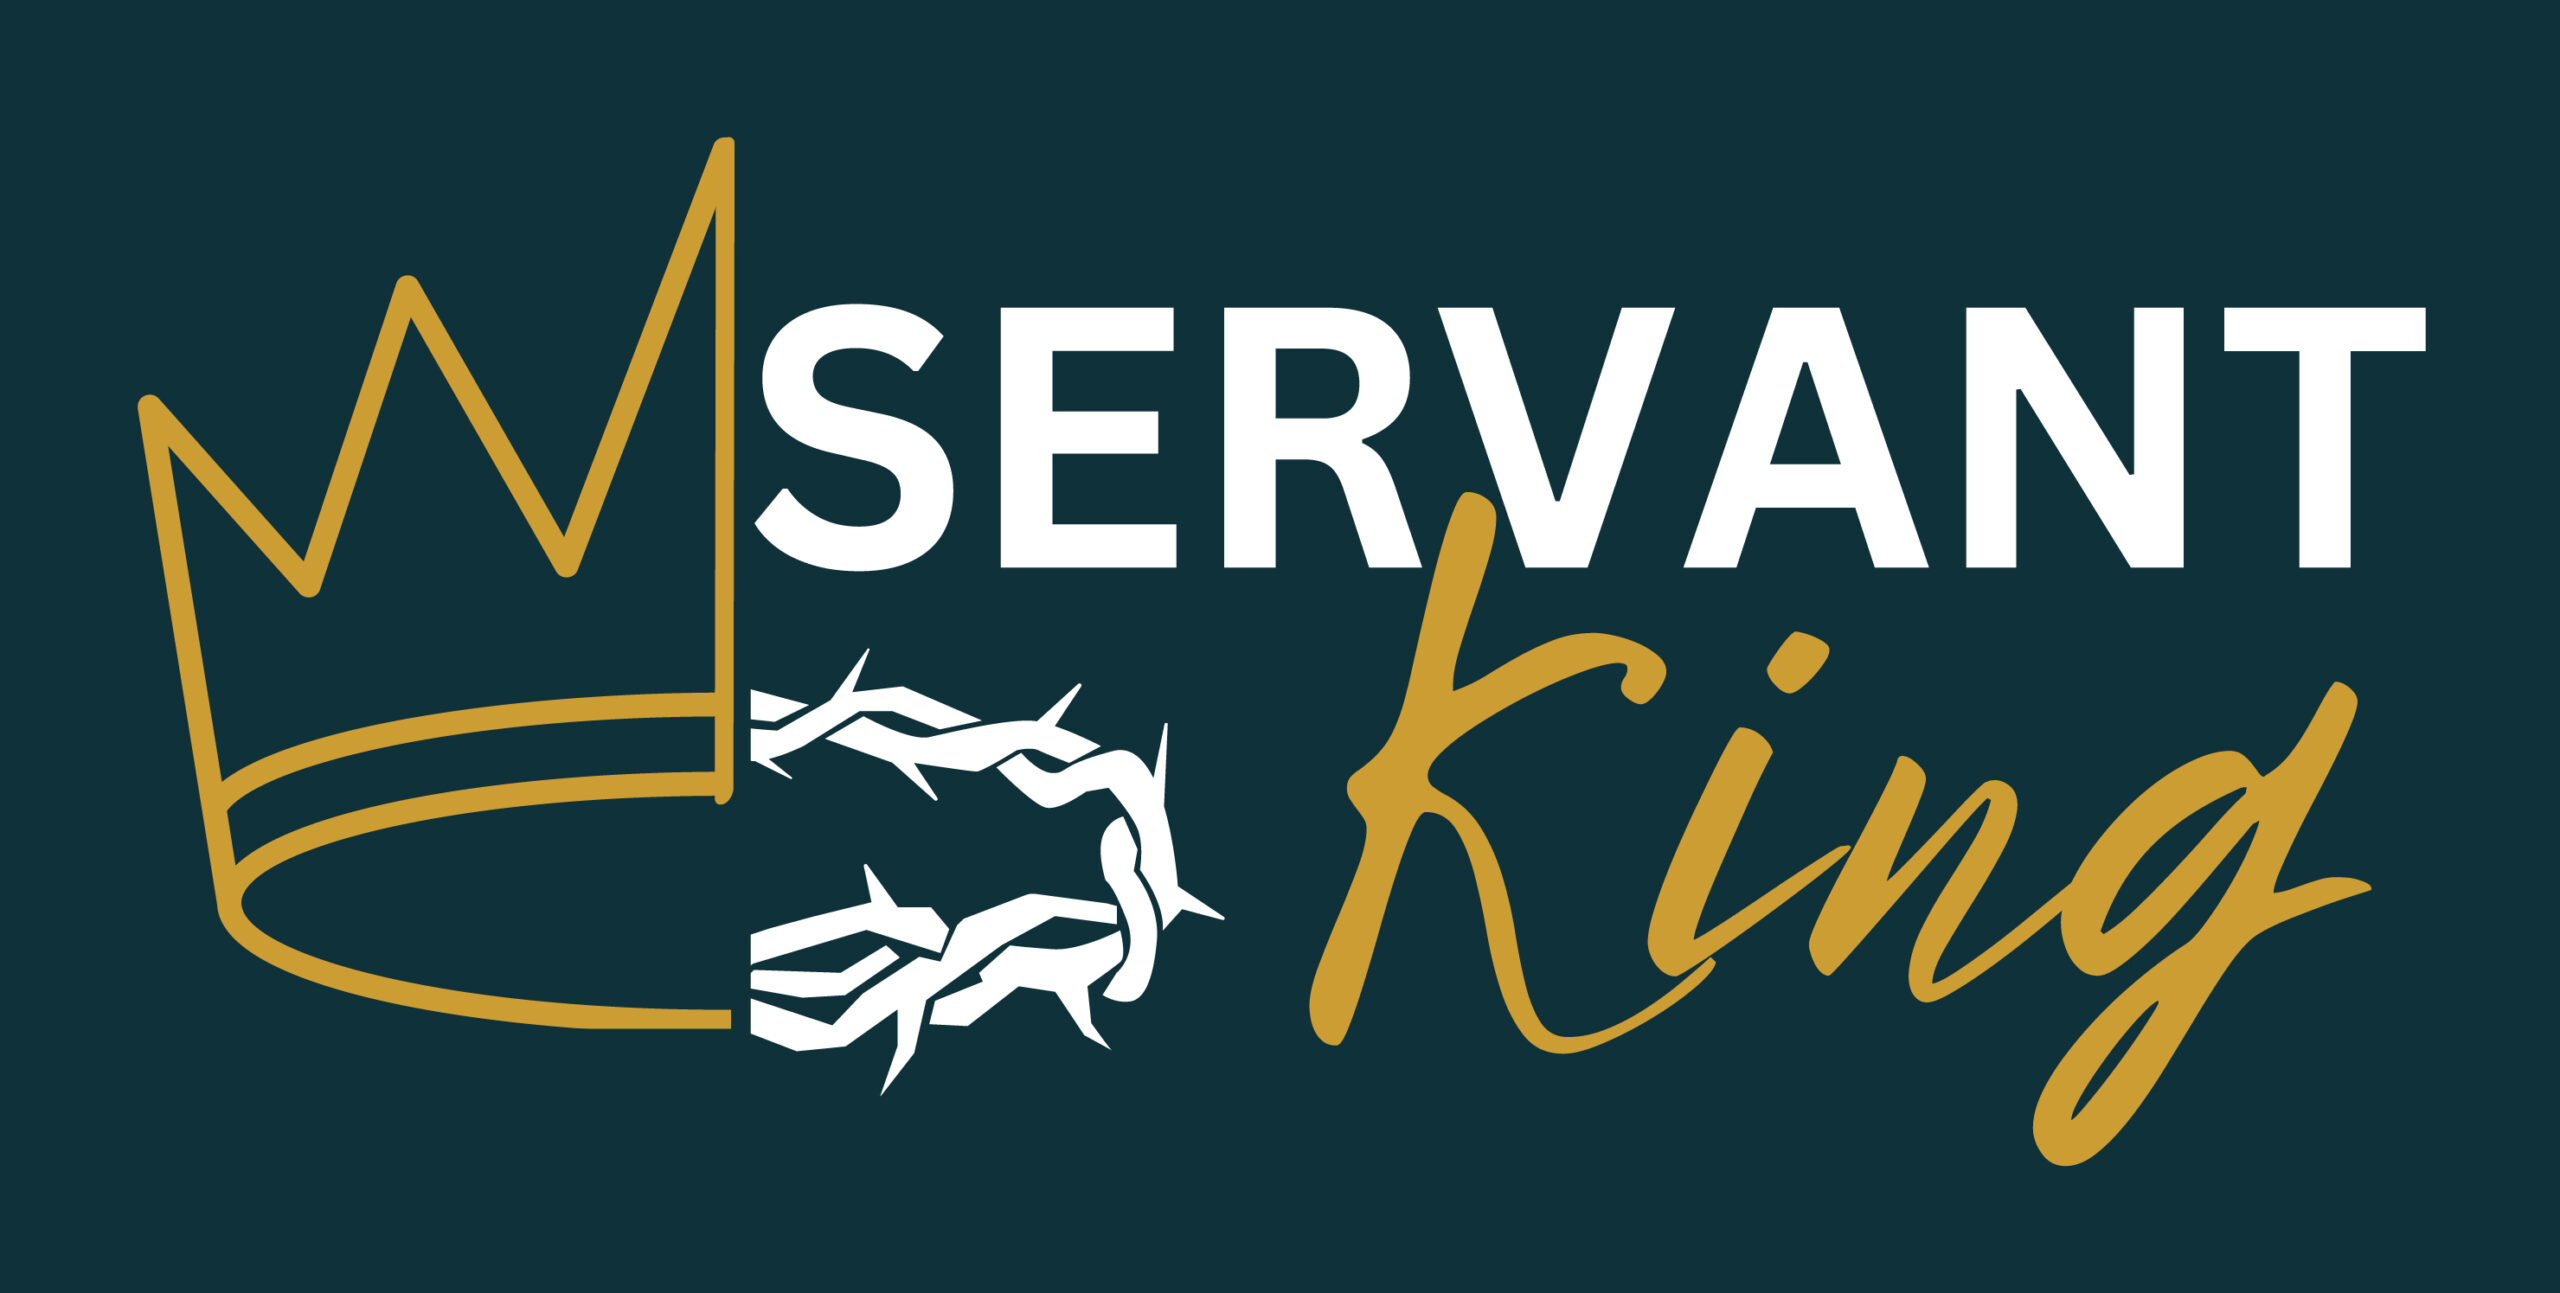 Servant King_Secondary Header_1420x717